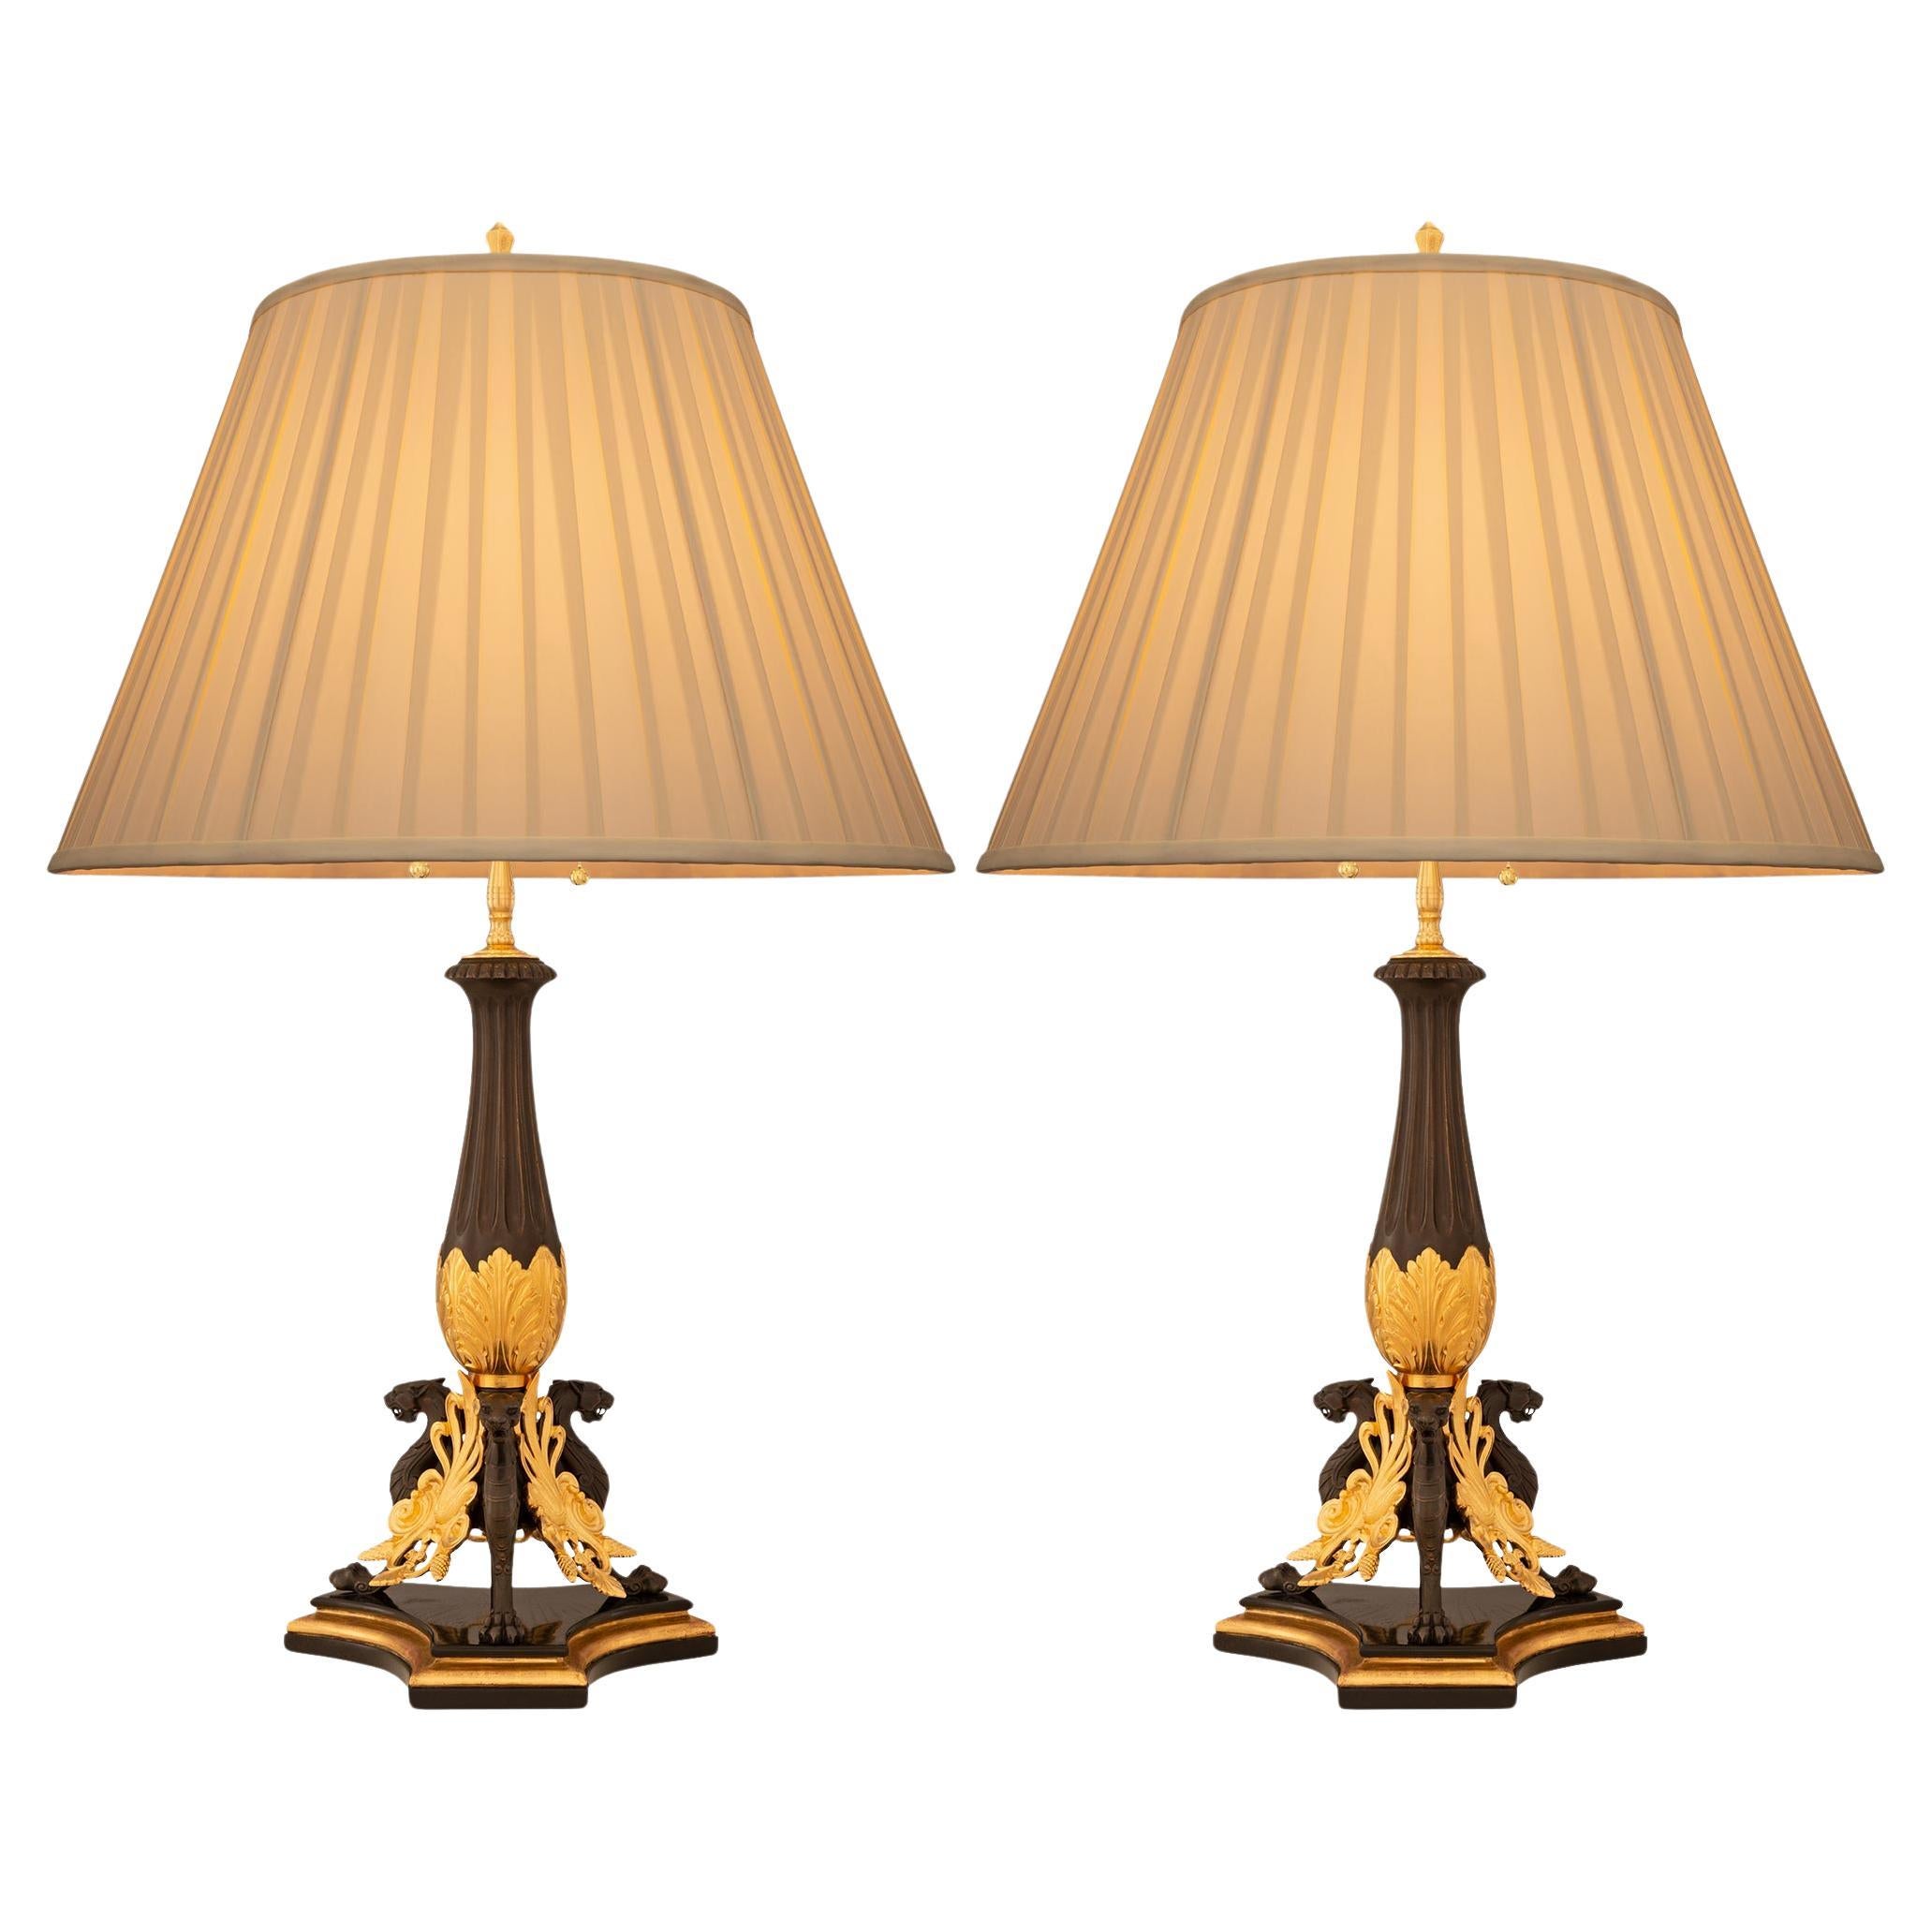 Greek Revival Table Lamps